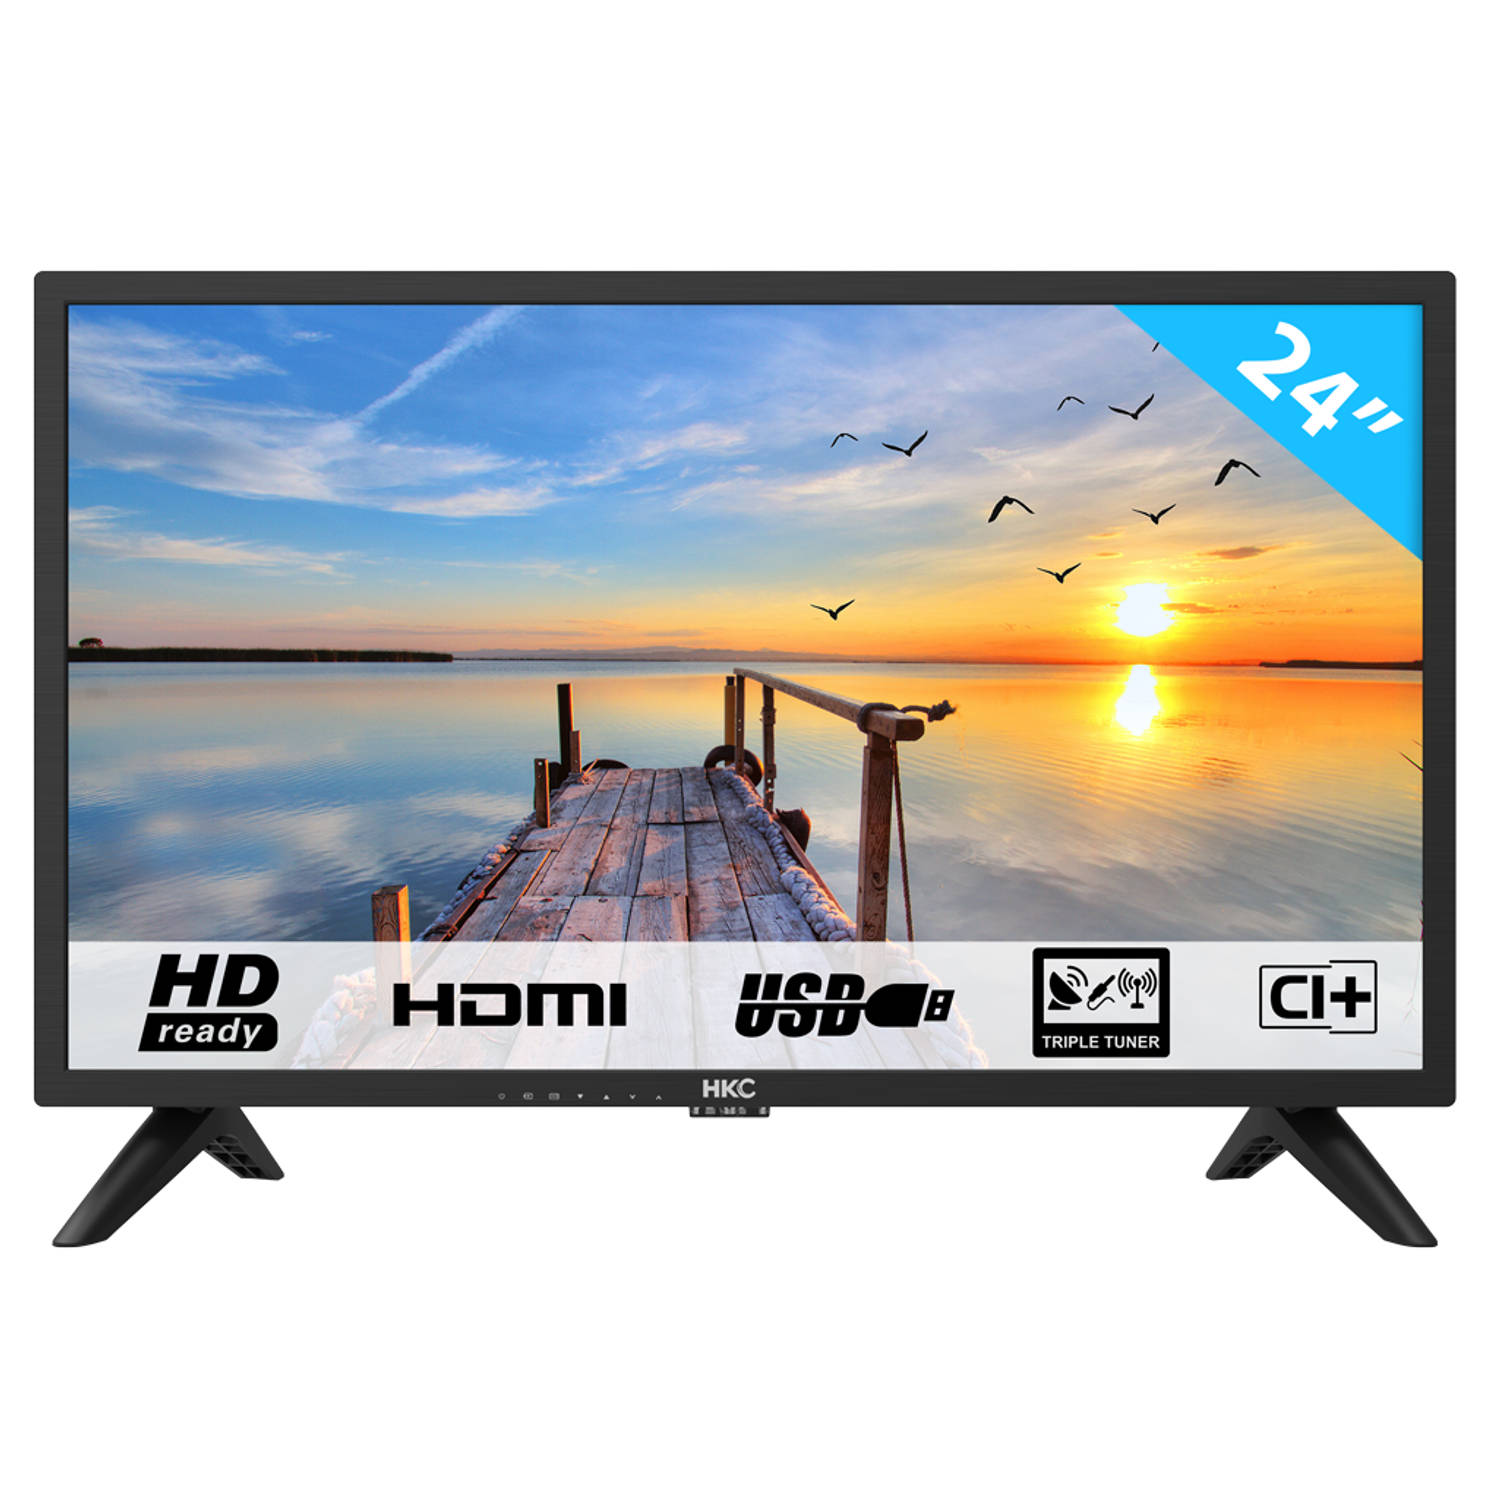 cap Rusteloosheid Convergeren HKC 24F1D-EU 24 inch HD Ready TV met HDMI en USB | Blokker